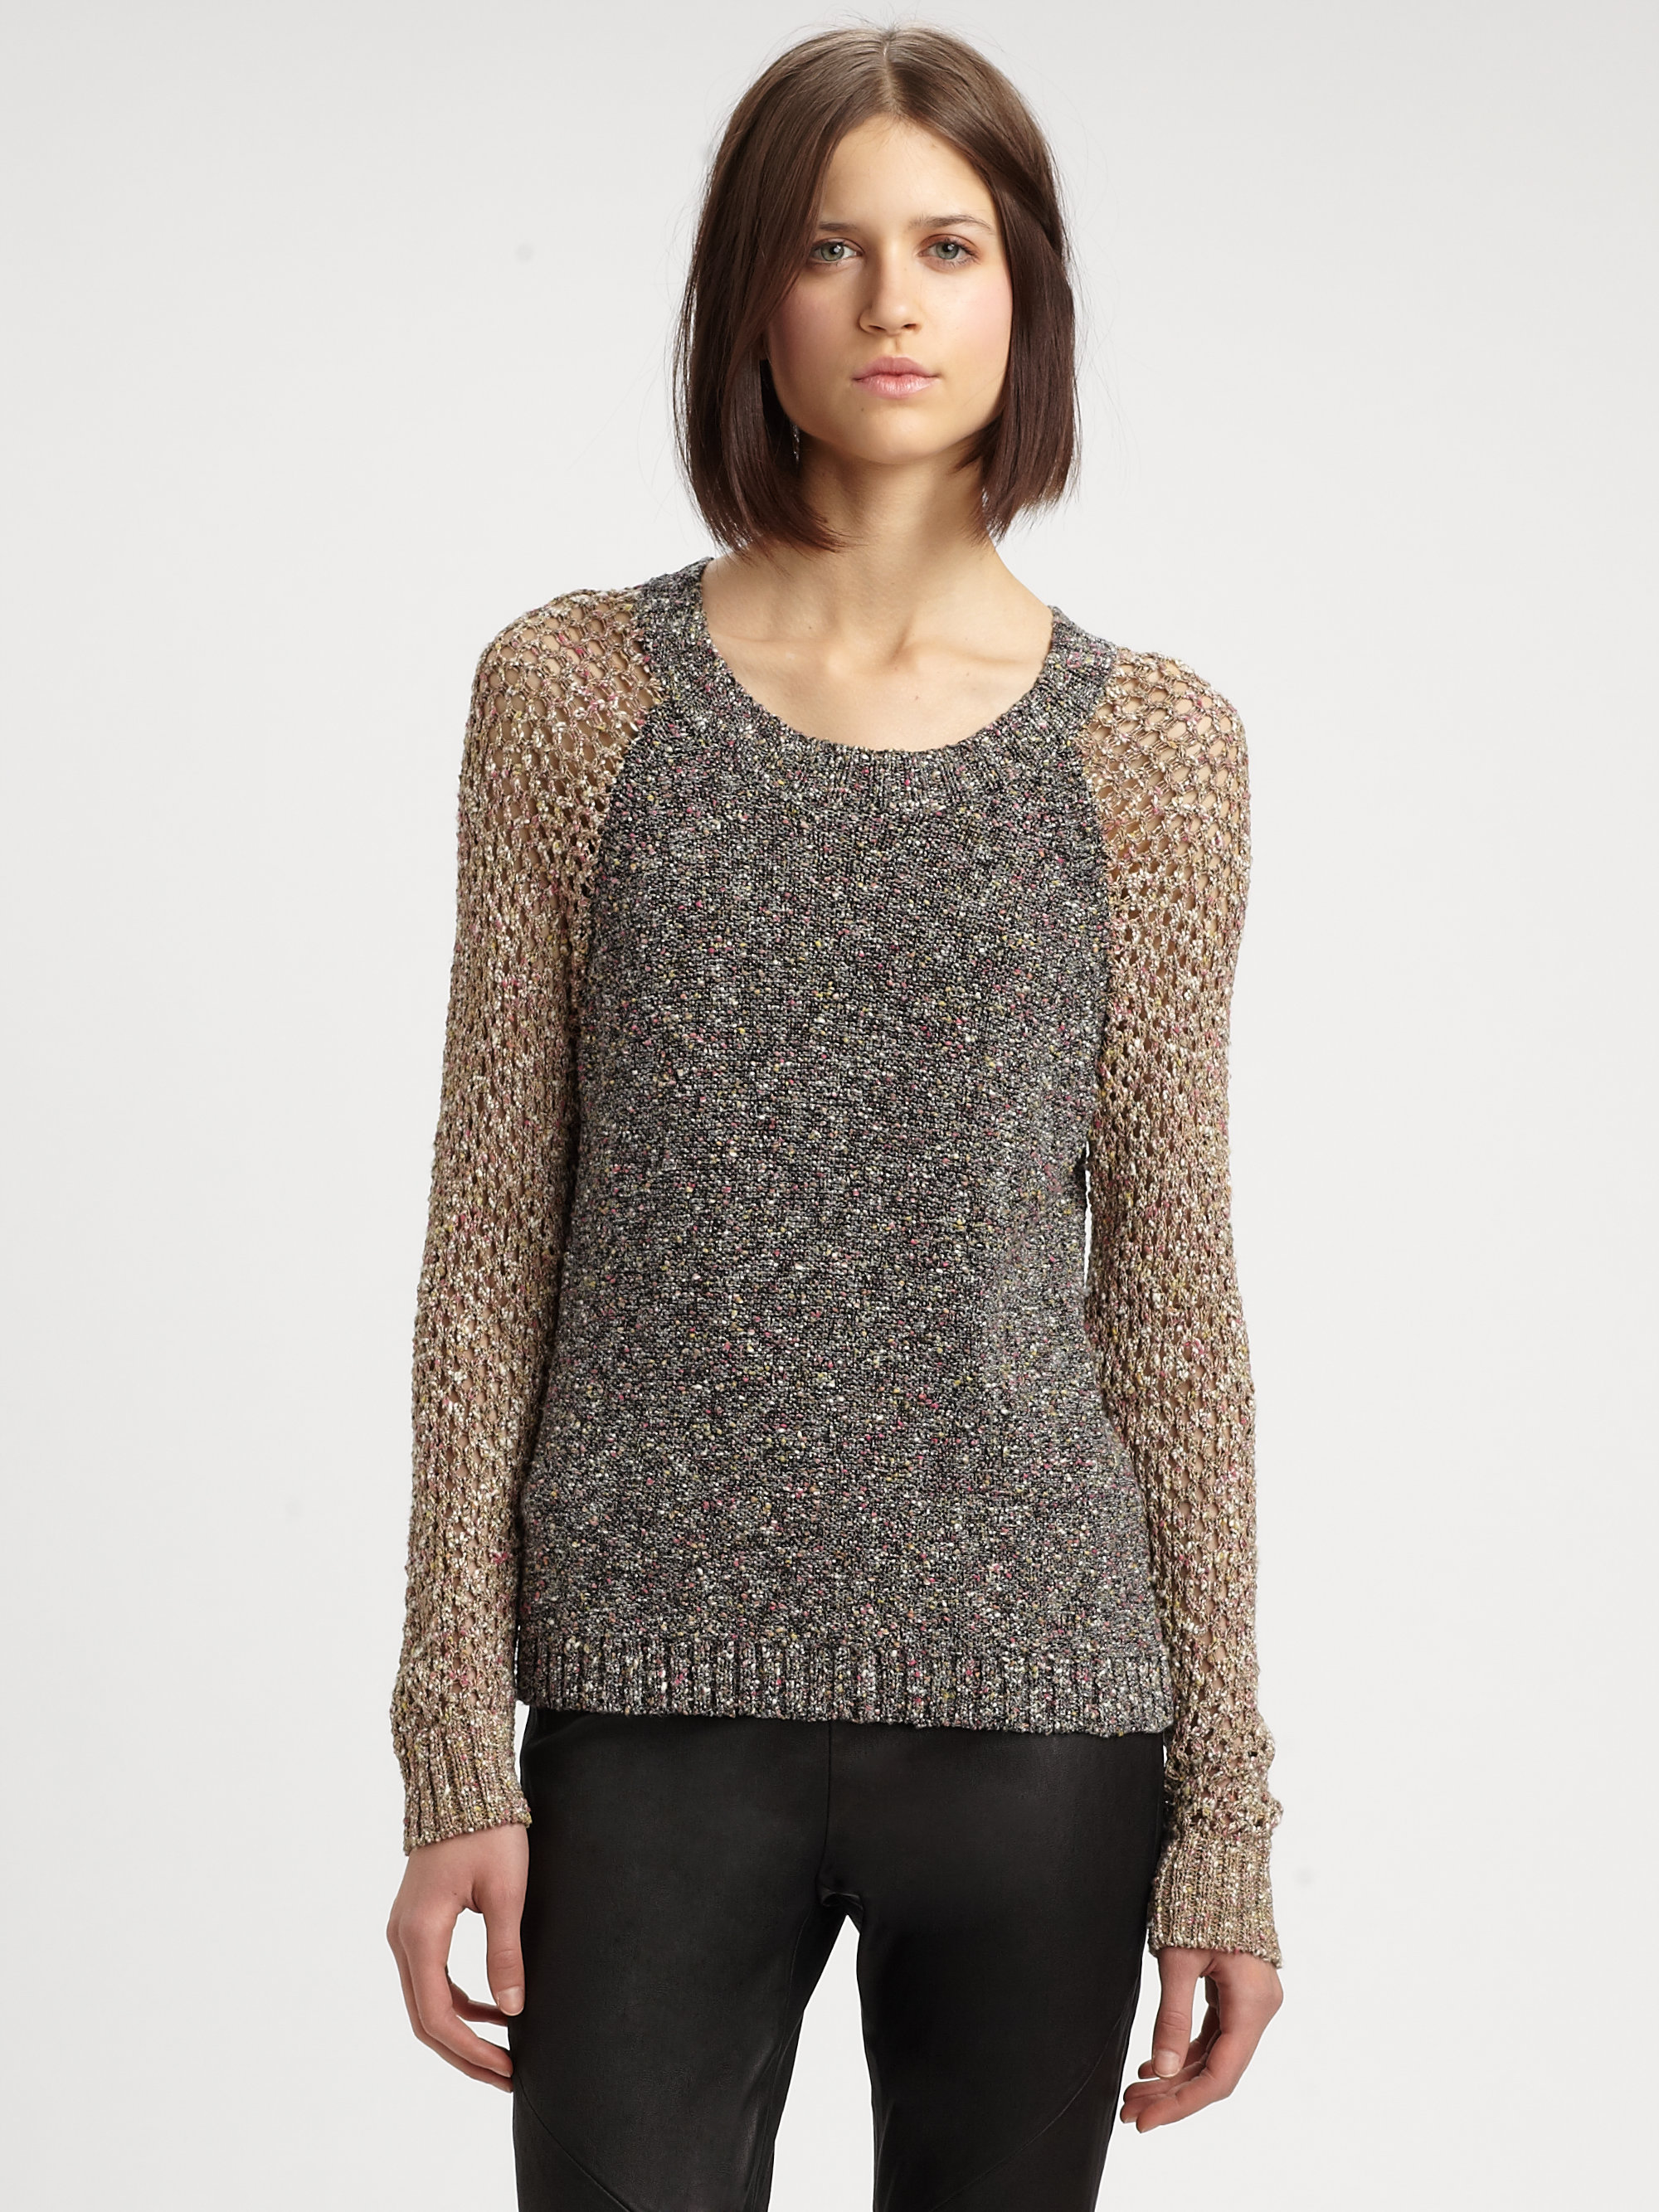 Rag & bone Lory Sweater in Gray | Lyst